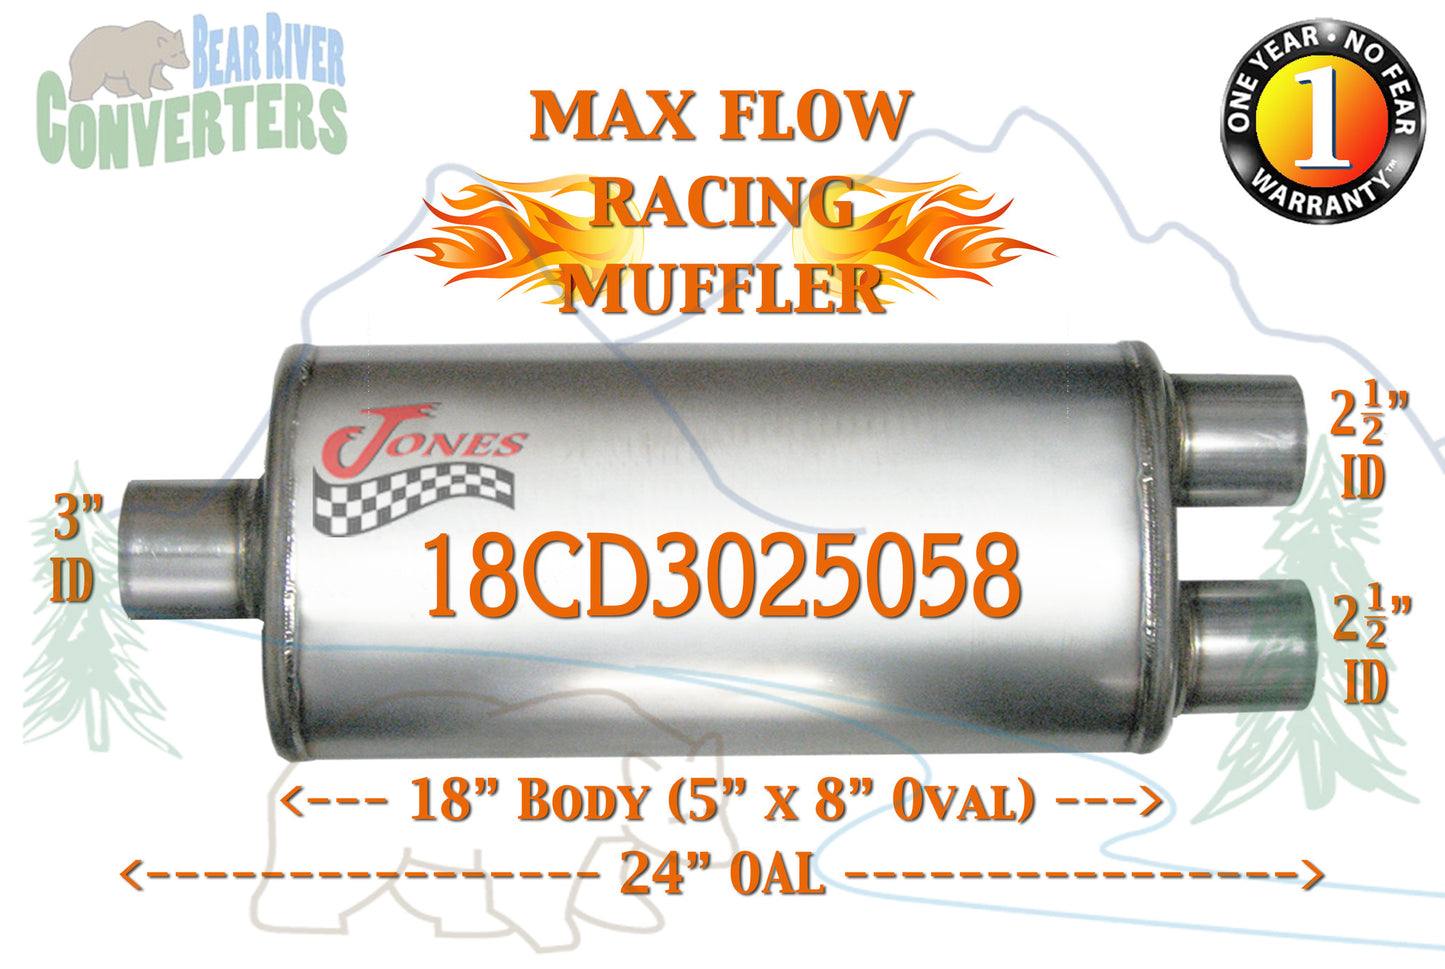 18CD3025058 Jones MF2288 Max Flow Racing Muffler 18” Oval Body 3” Center/ 2 1/2” Dual Pipe 24” OAL - Bear River Converters